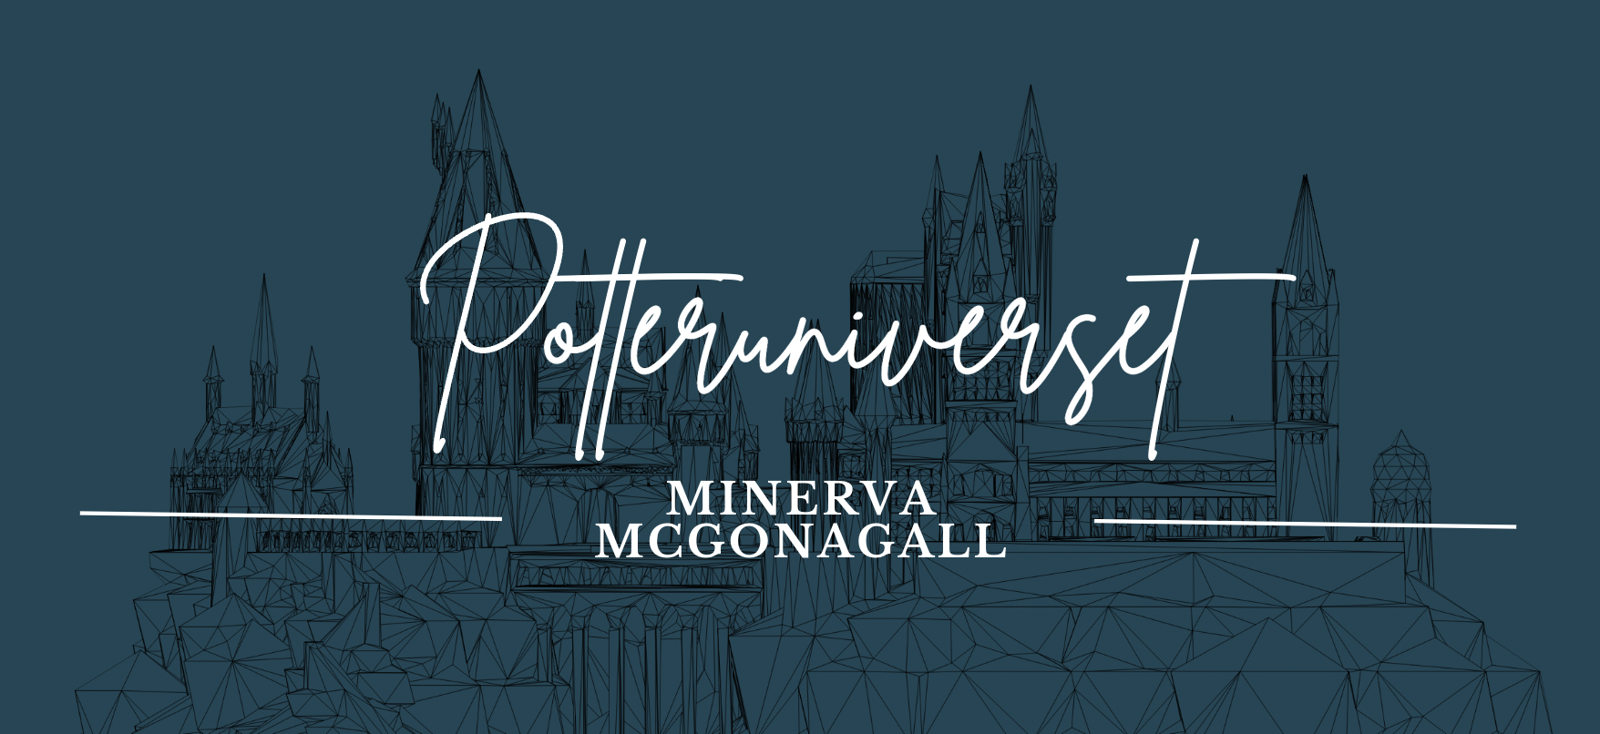 Potteruniverset: Minerva McGonagall fra Harry Potter Universet